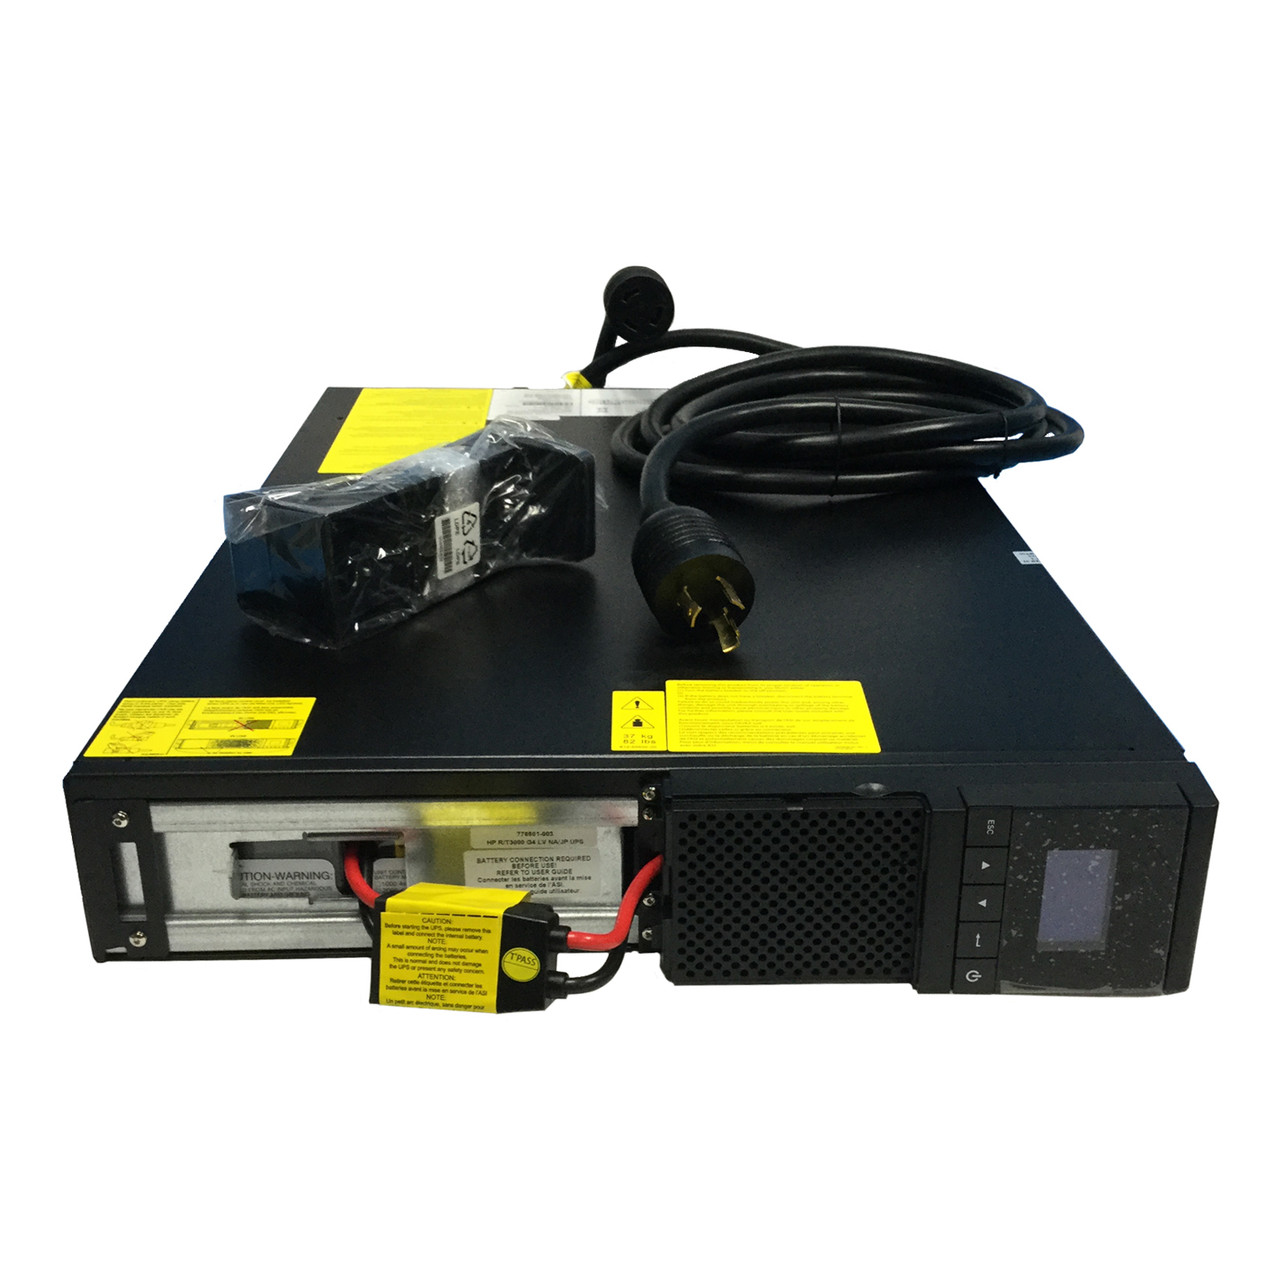 HP J2R01A | R/T UPS3000 G4 low voltage - NOB | 796758-001 | 776501 